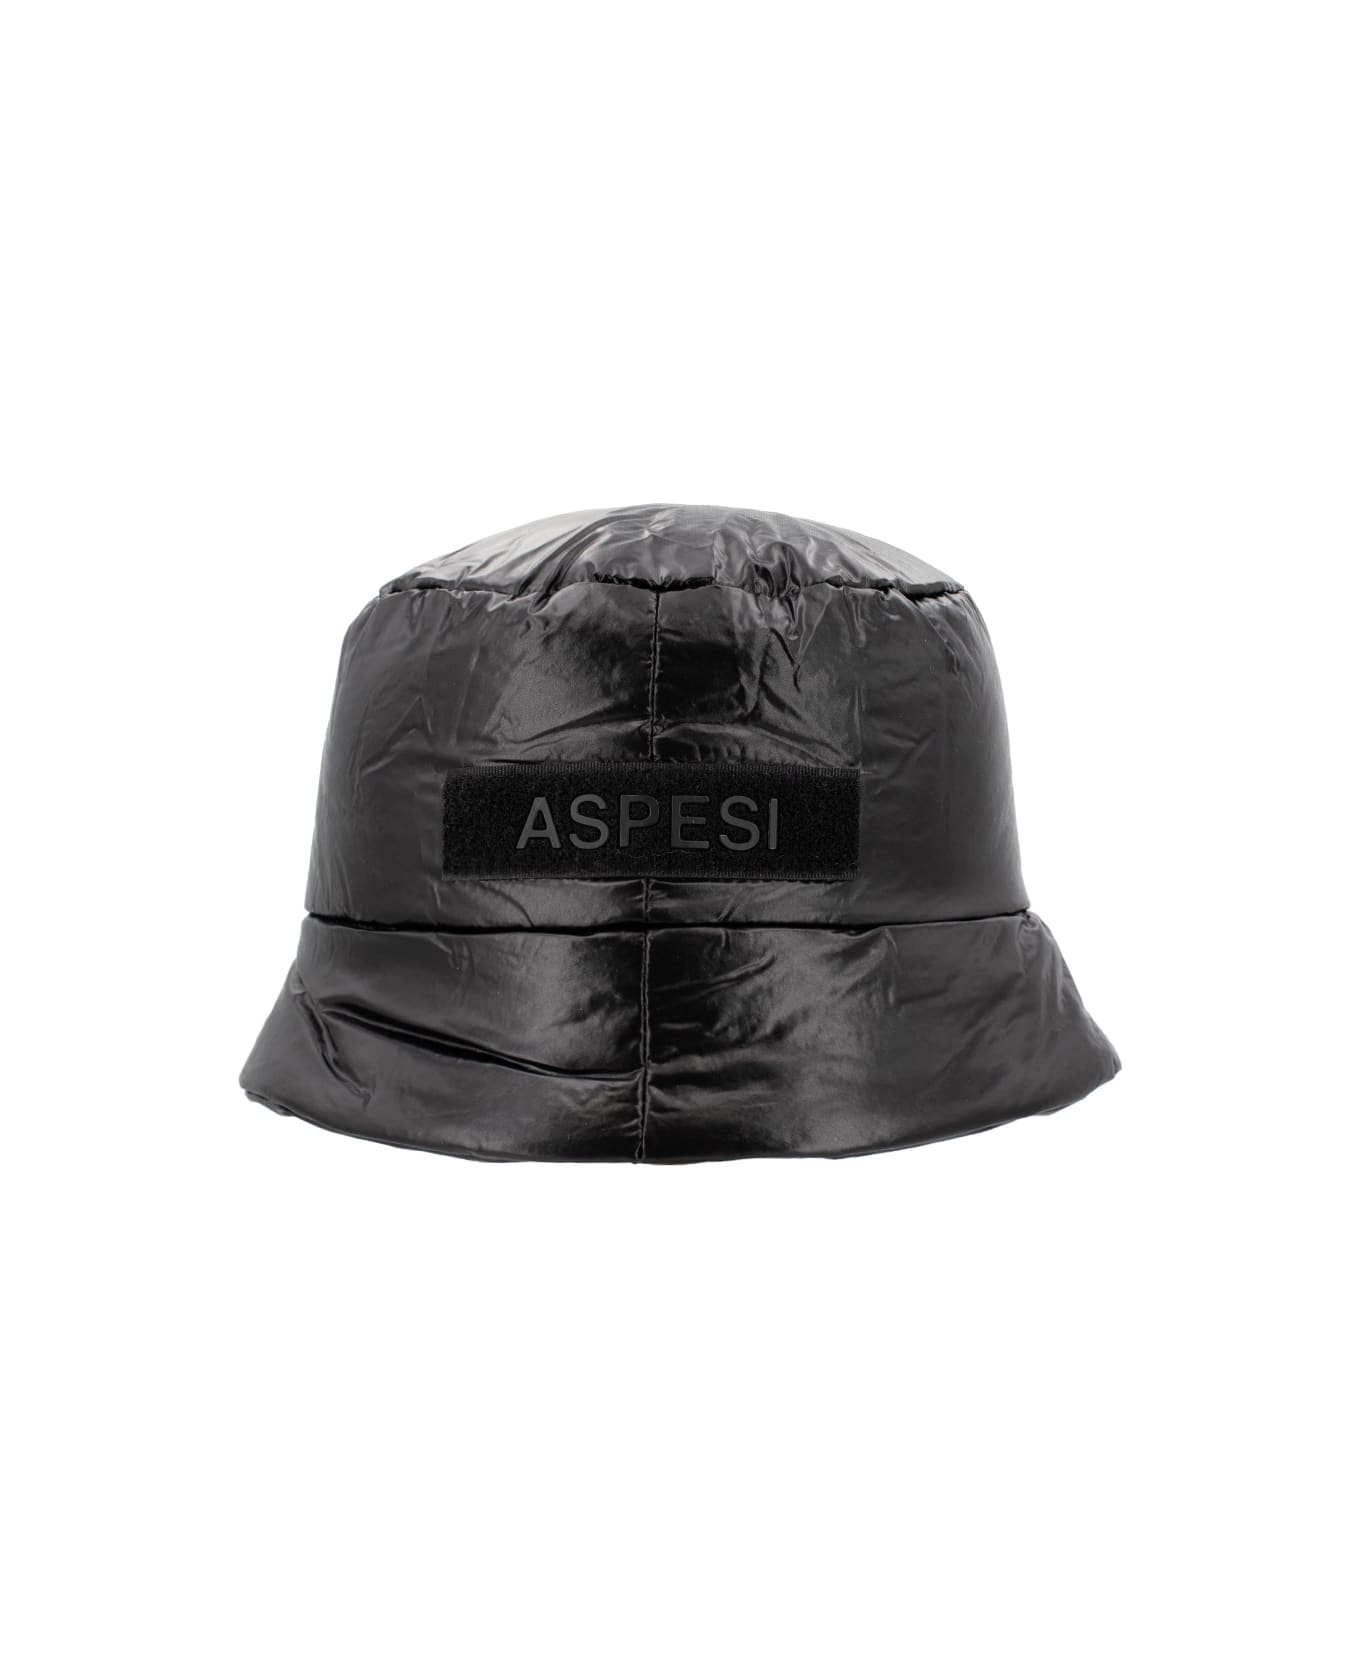 Aspesi Hat - BLACK